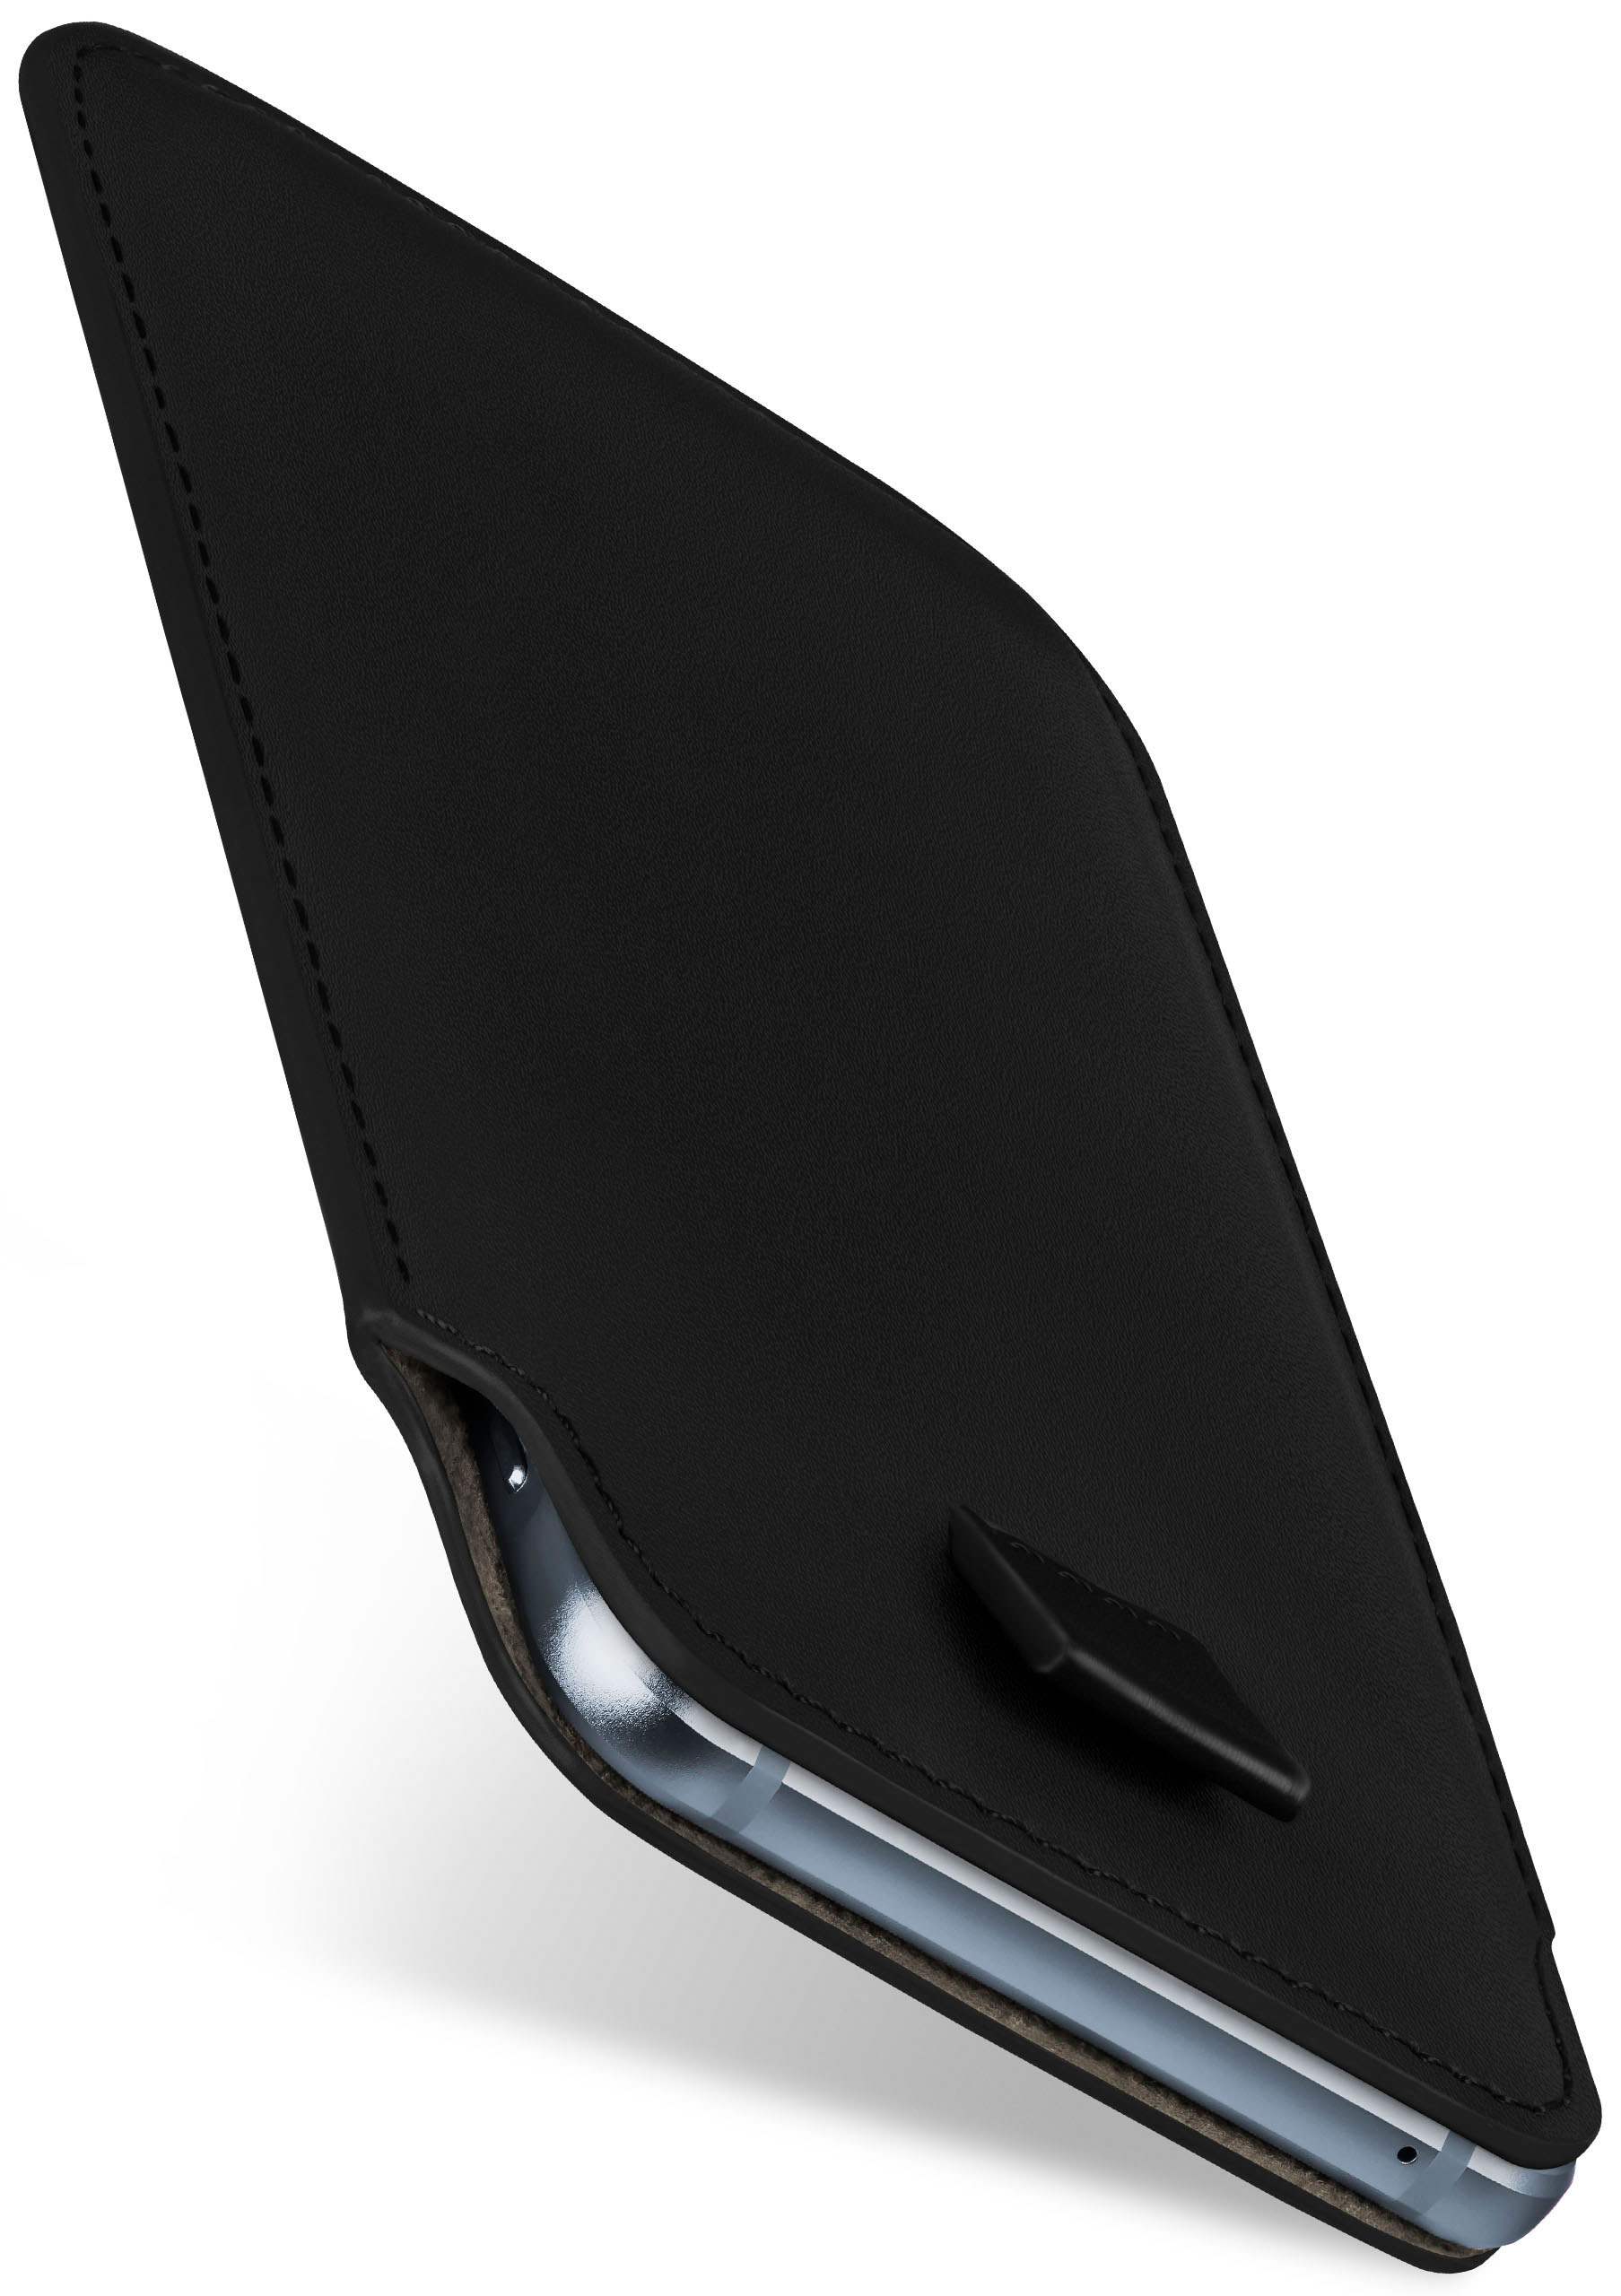 MOEX Slide Case, Deep-Black C10, Full Aquos Cover, Sharp